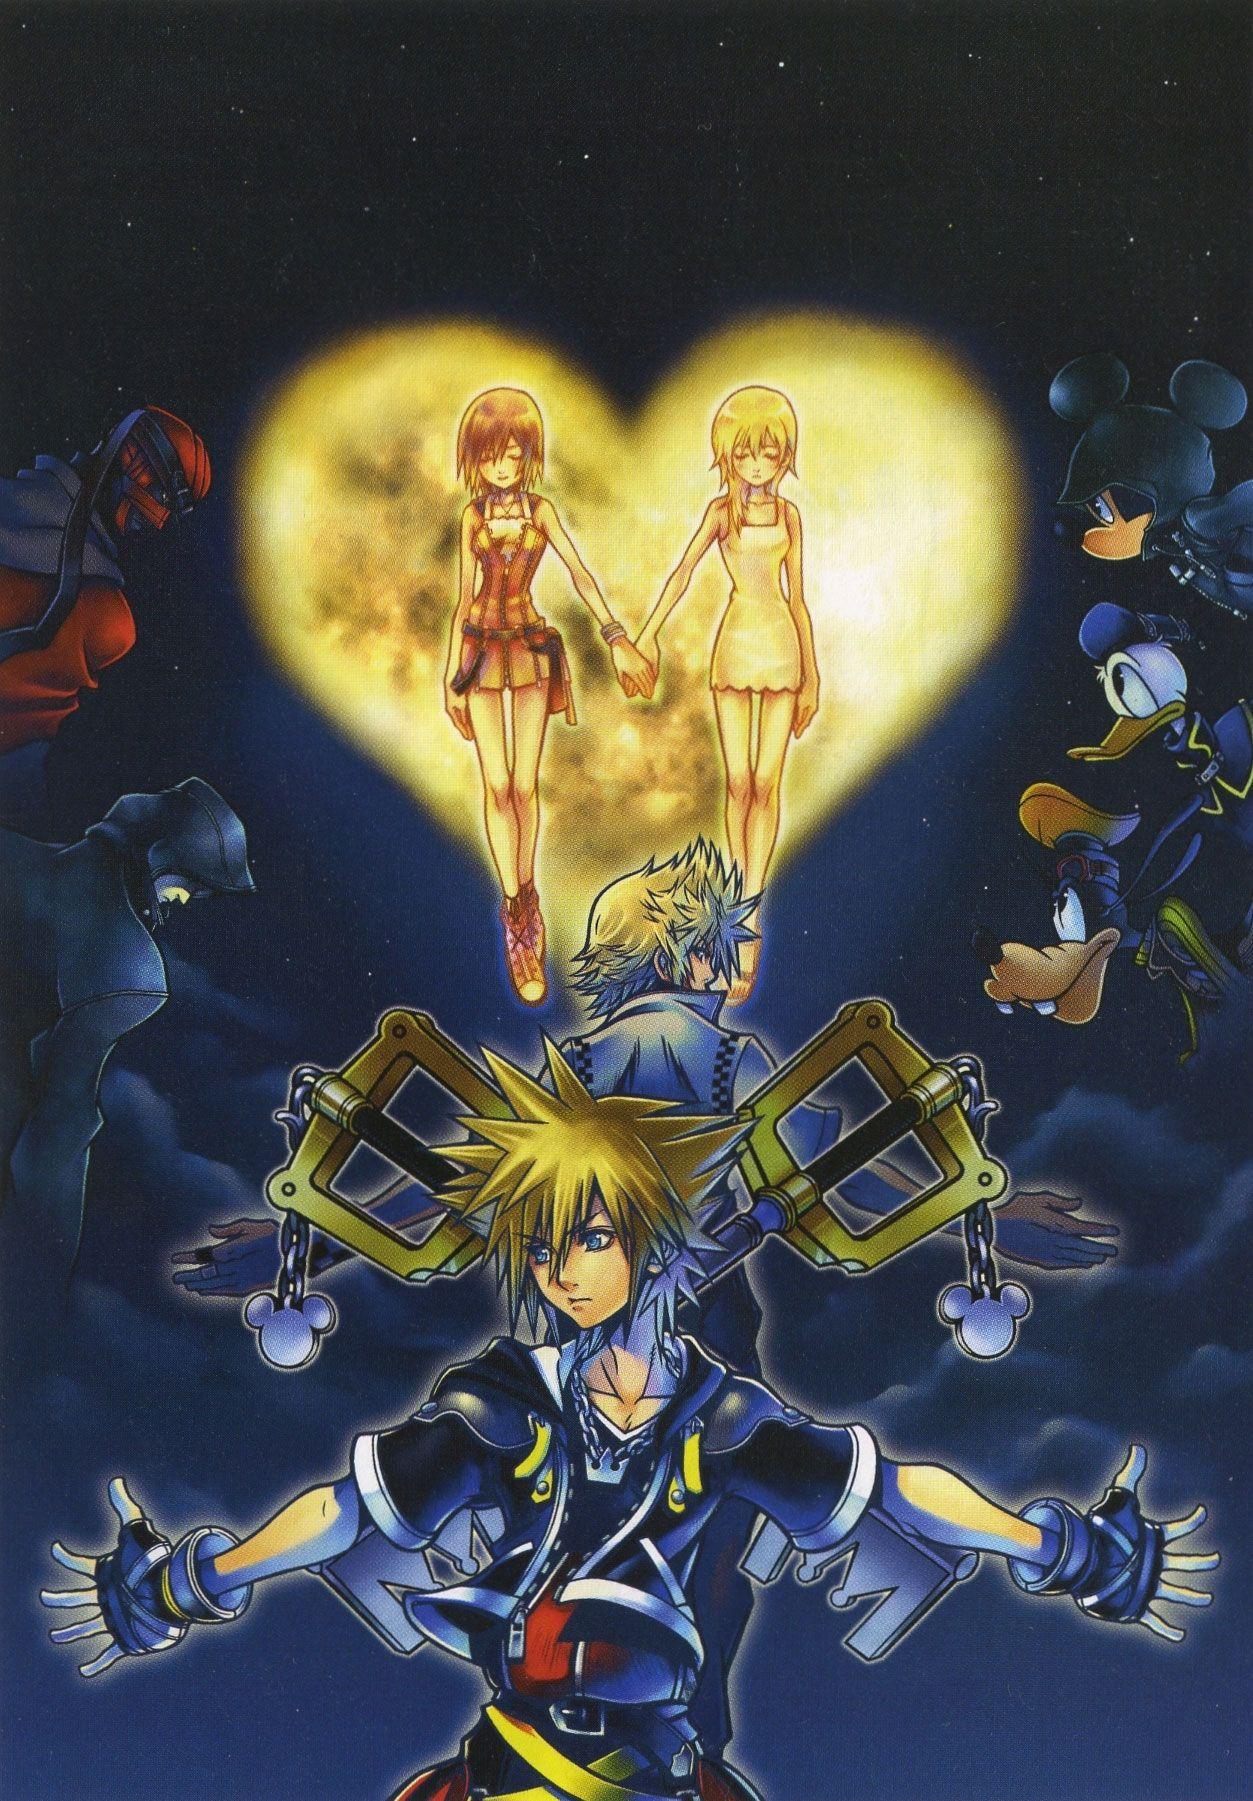 Wallpaper For > Kingdom Hearts 1 Wallpaper